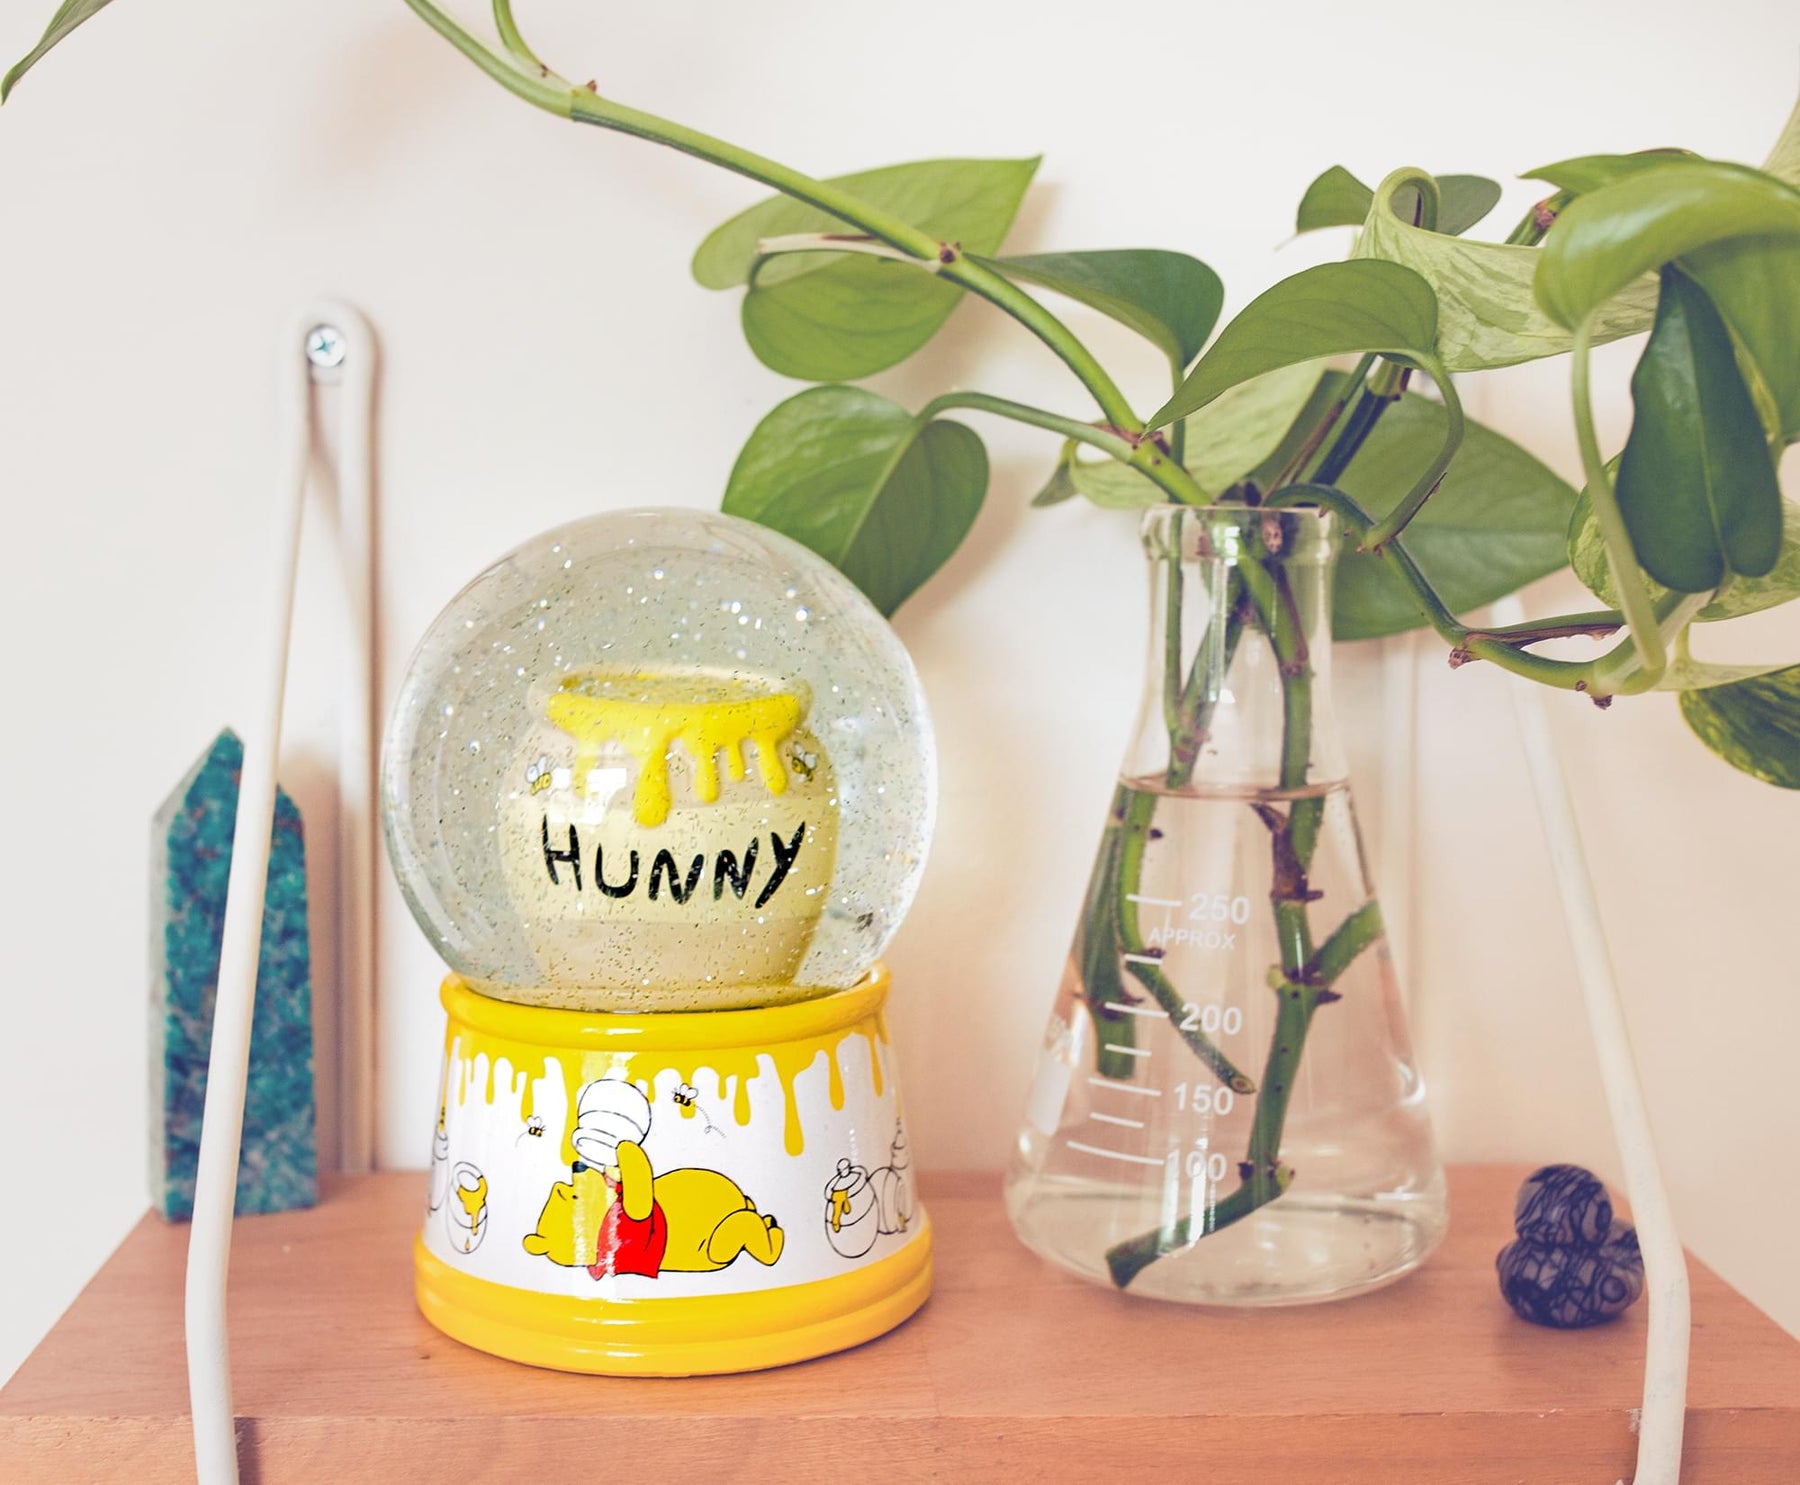 Disney Winnie The Pooh Hunny Pot Light-Up Snow Globe | 6 Inches Tall